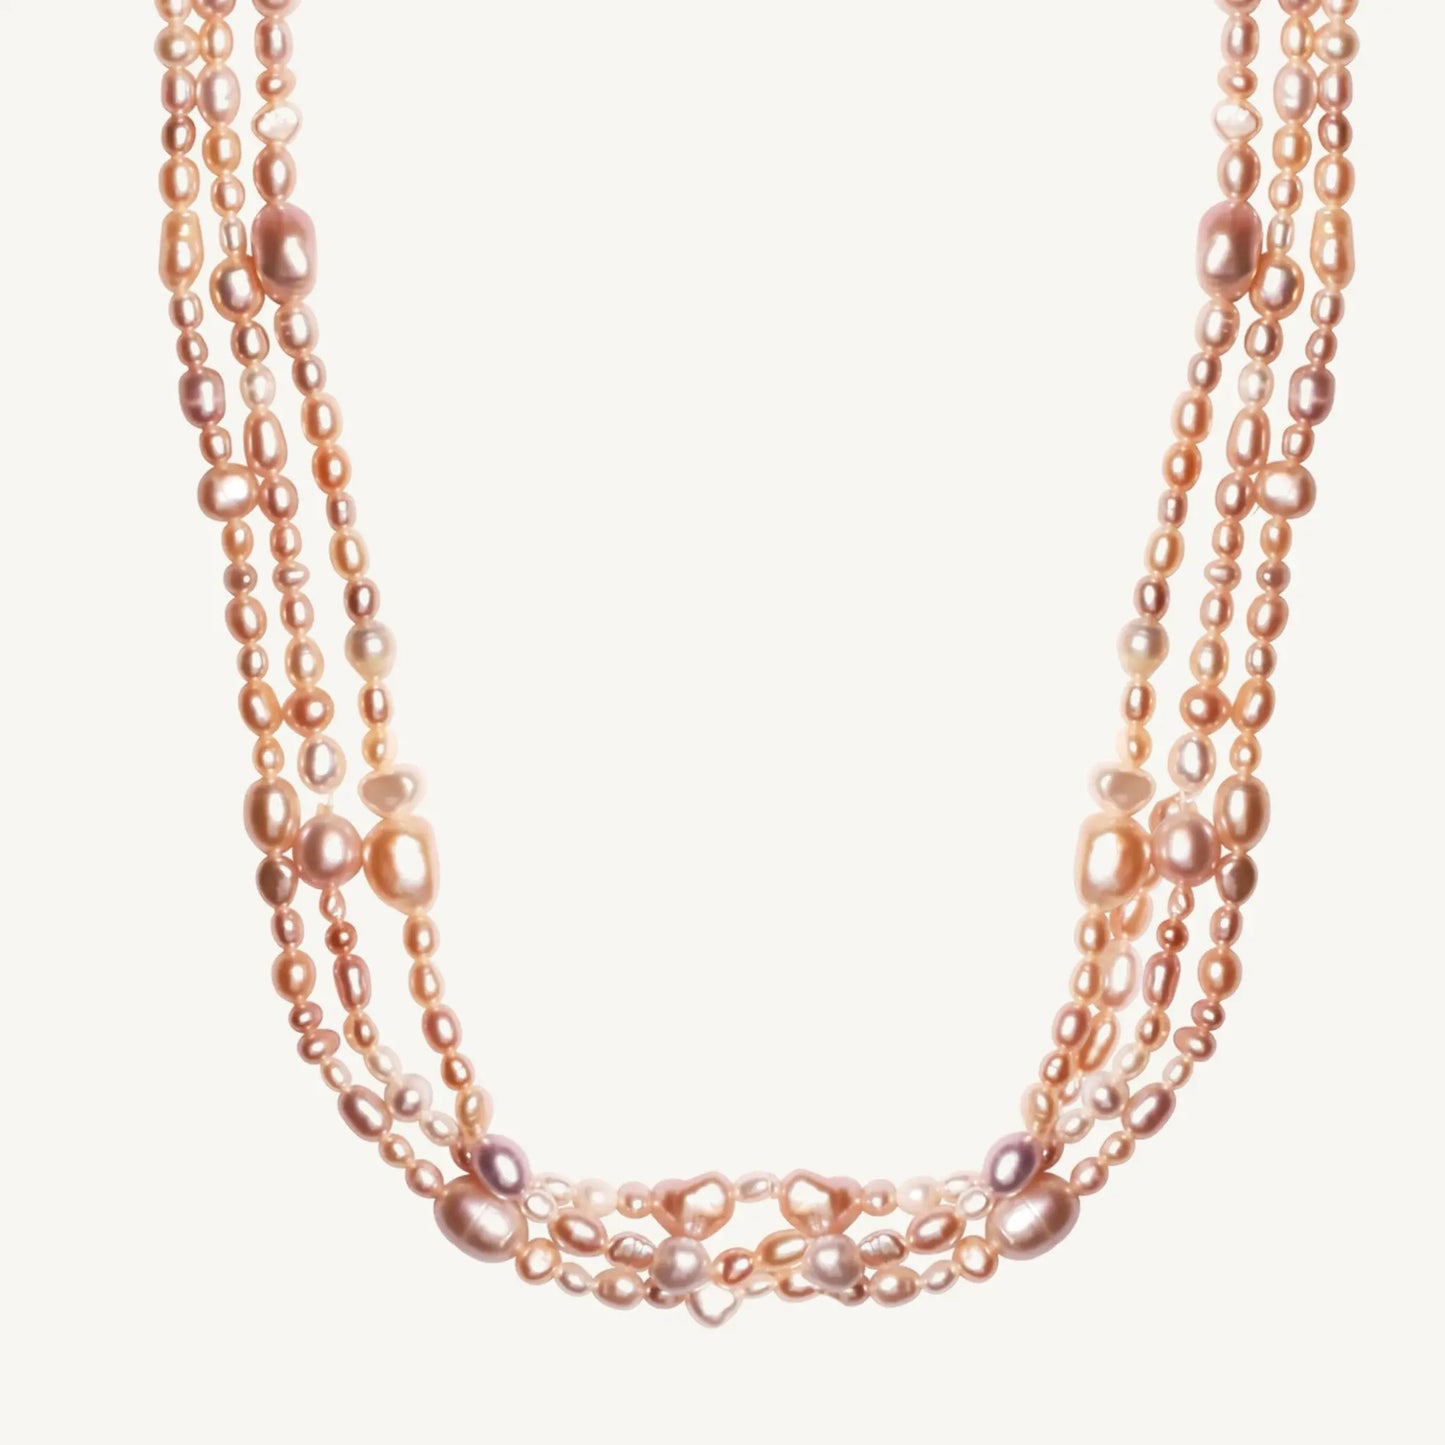 Namila Pearl Wrap Necklace Jewelmak Shop